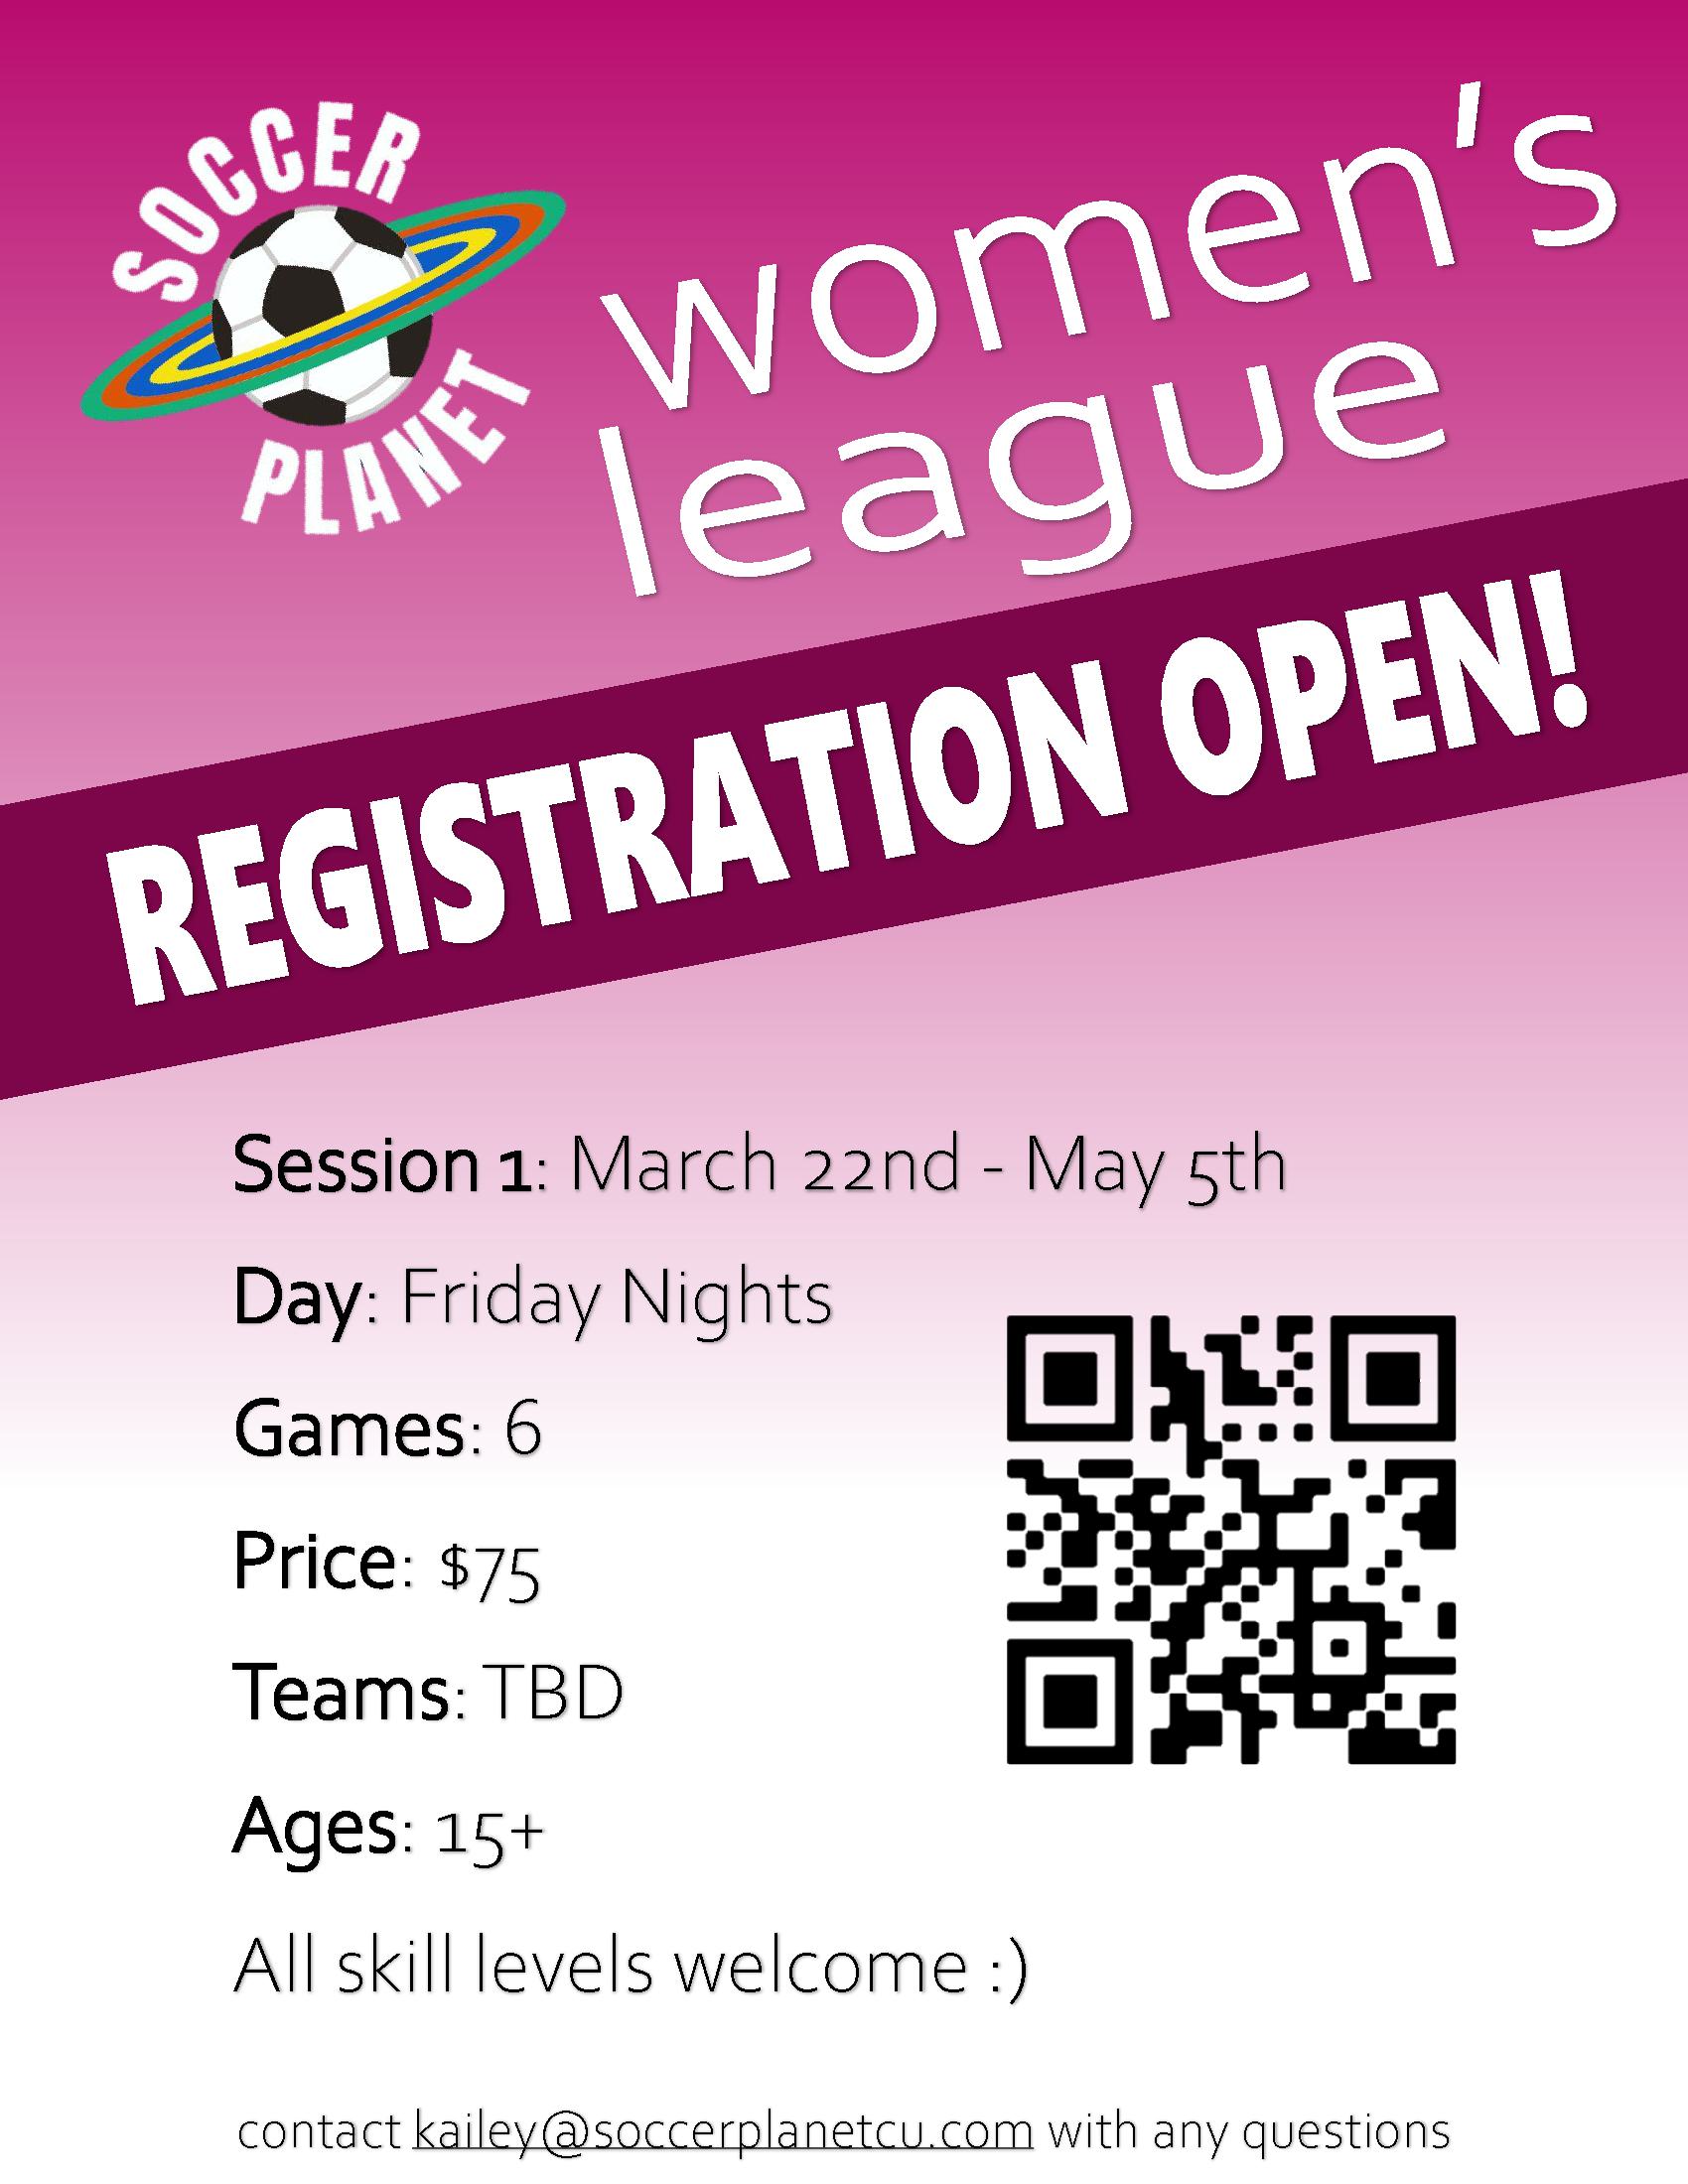 tinywow_Womens League Flyer - Registration Open_49691428_1